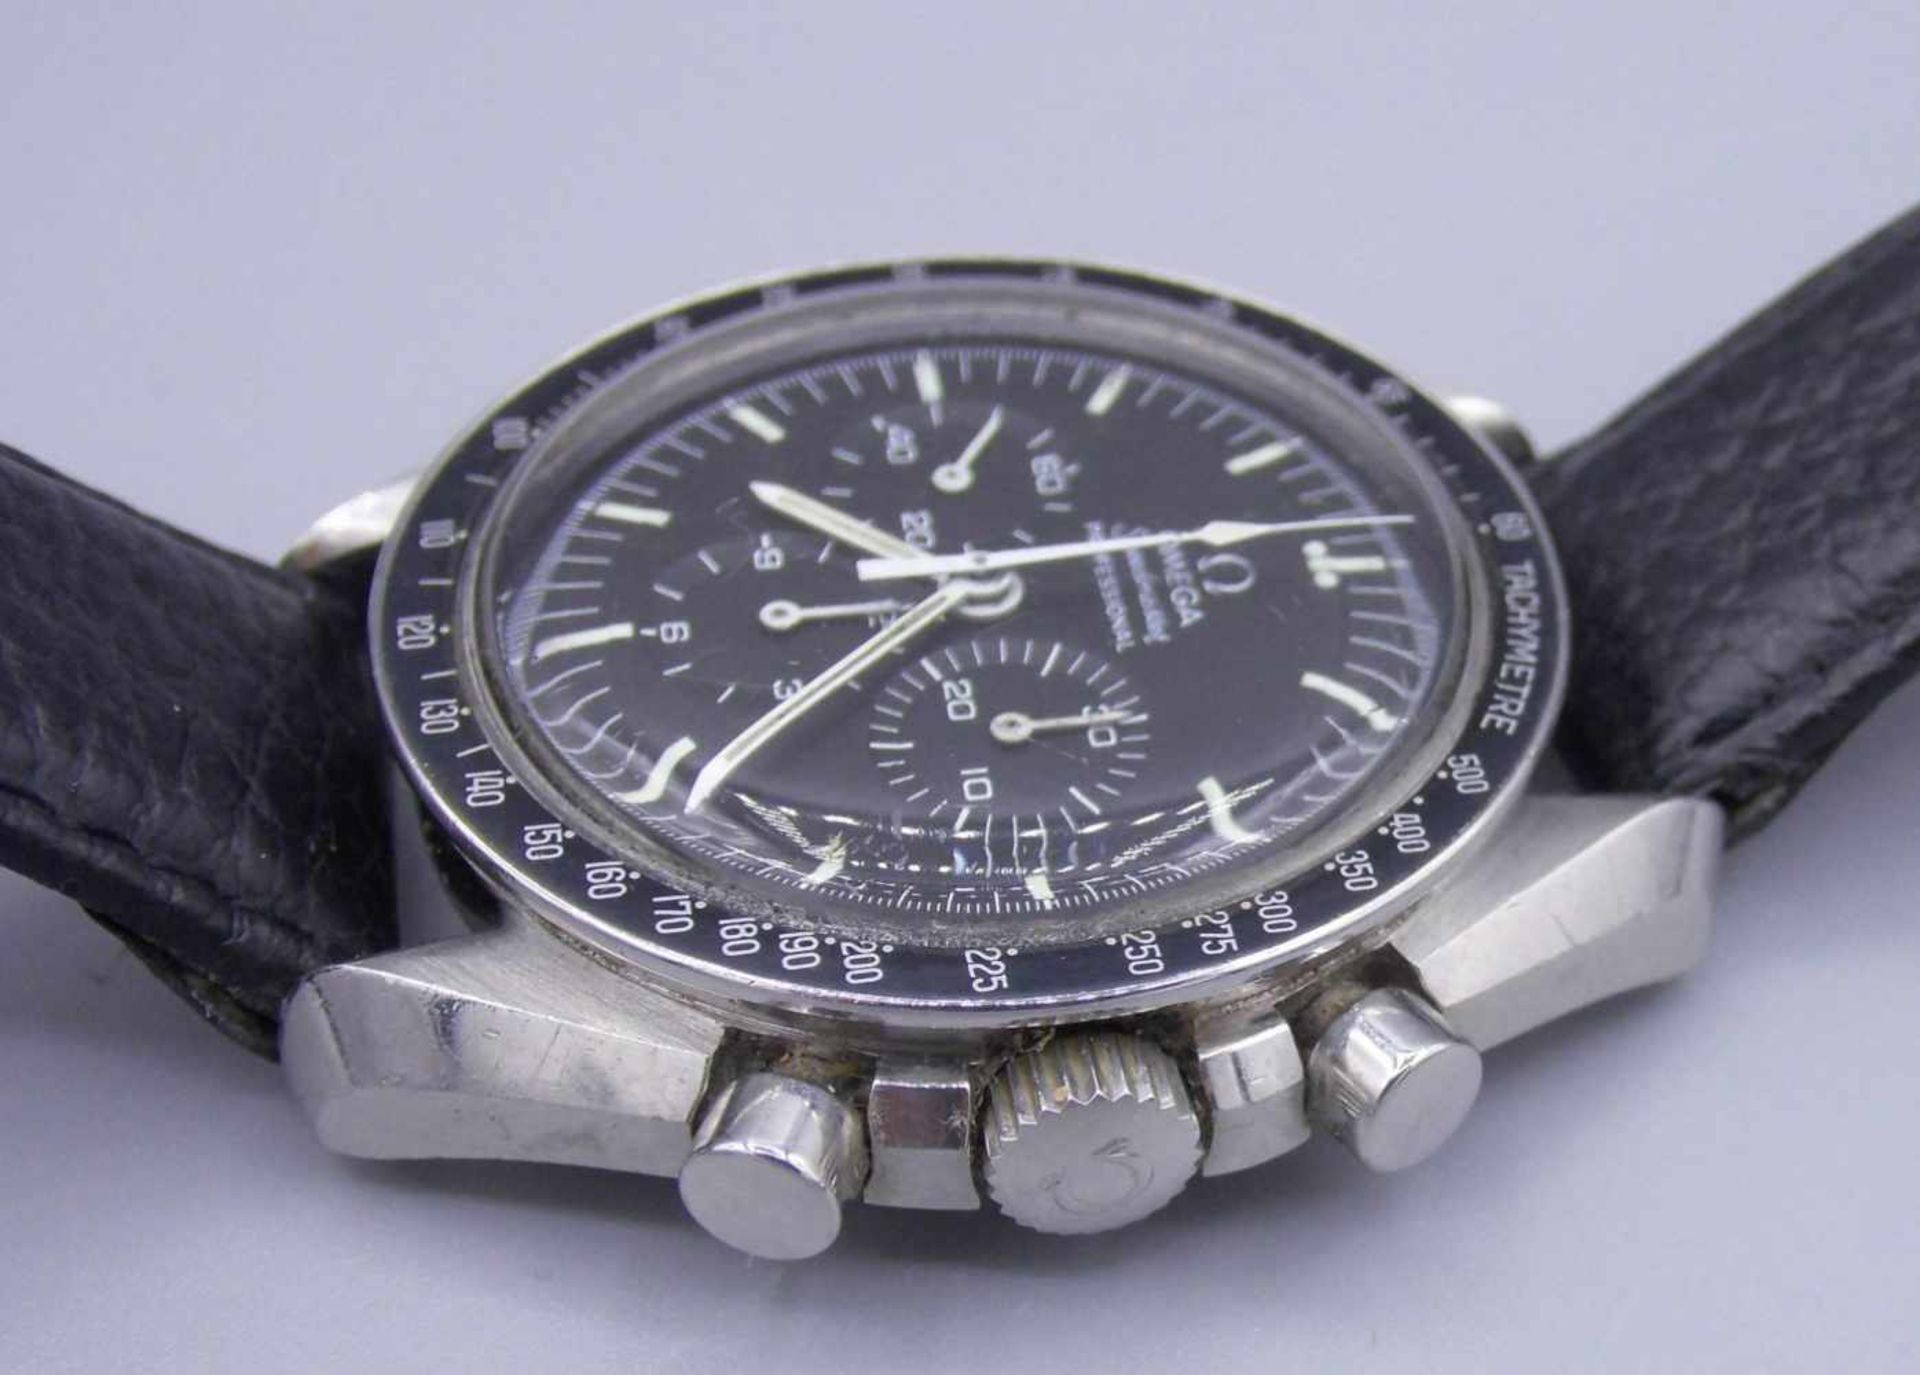 VINTAGE ARMBANDUHR / CHRONOGRAPH: OMEGA SPEEDMASTER PFROFESSIONAL - "MOONWATCH" / wristwatch, - Image 7 of 10